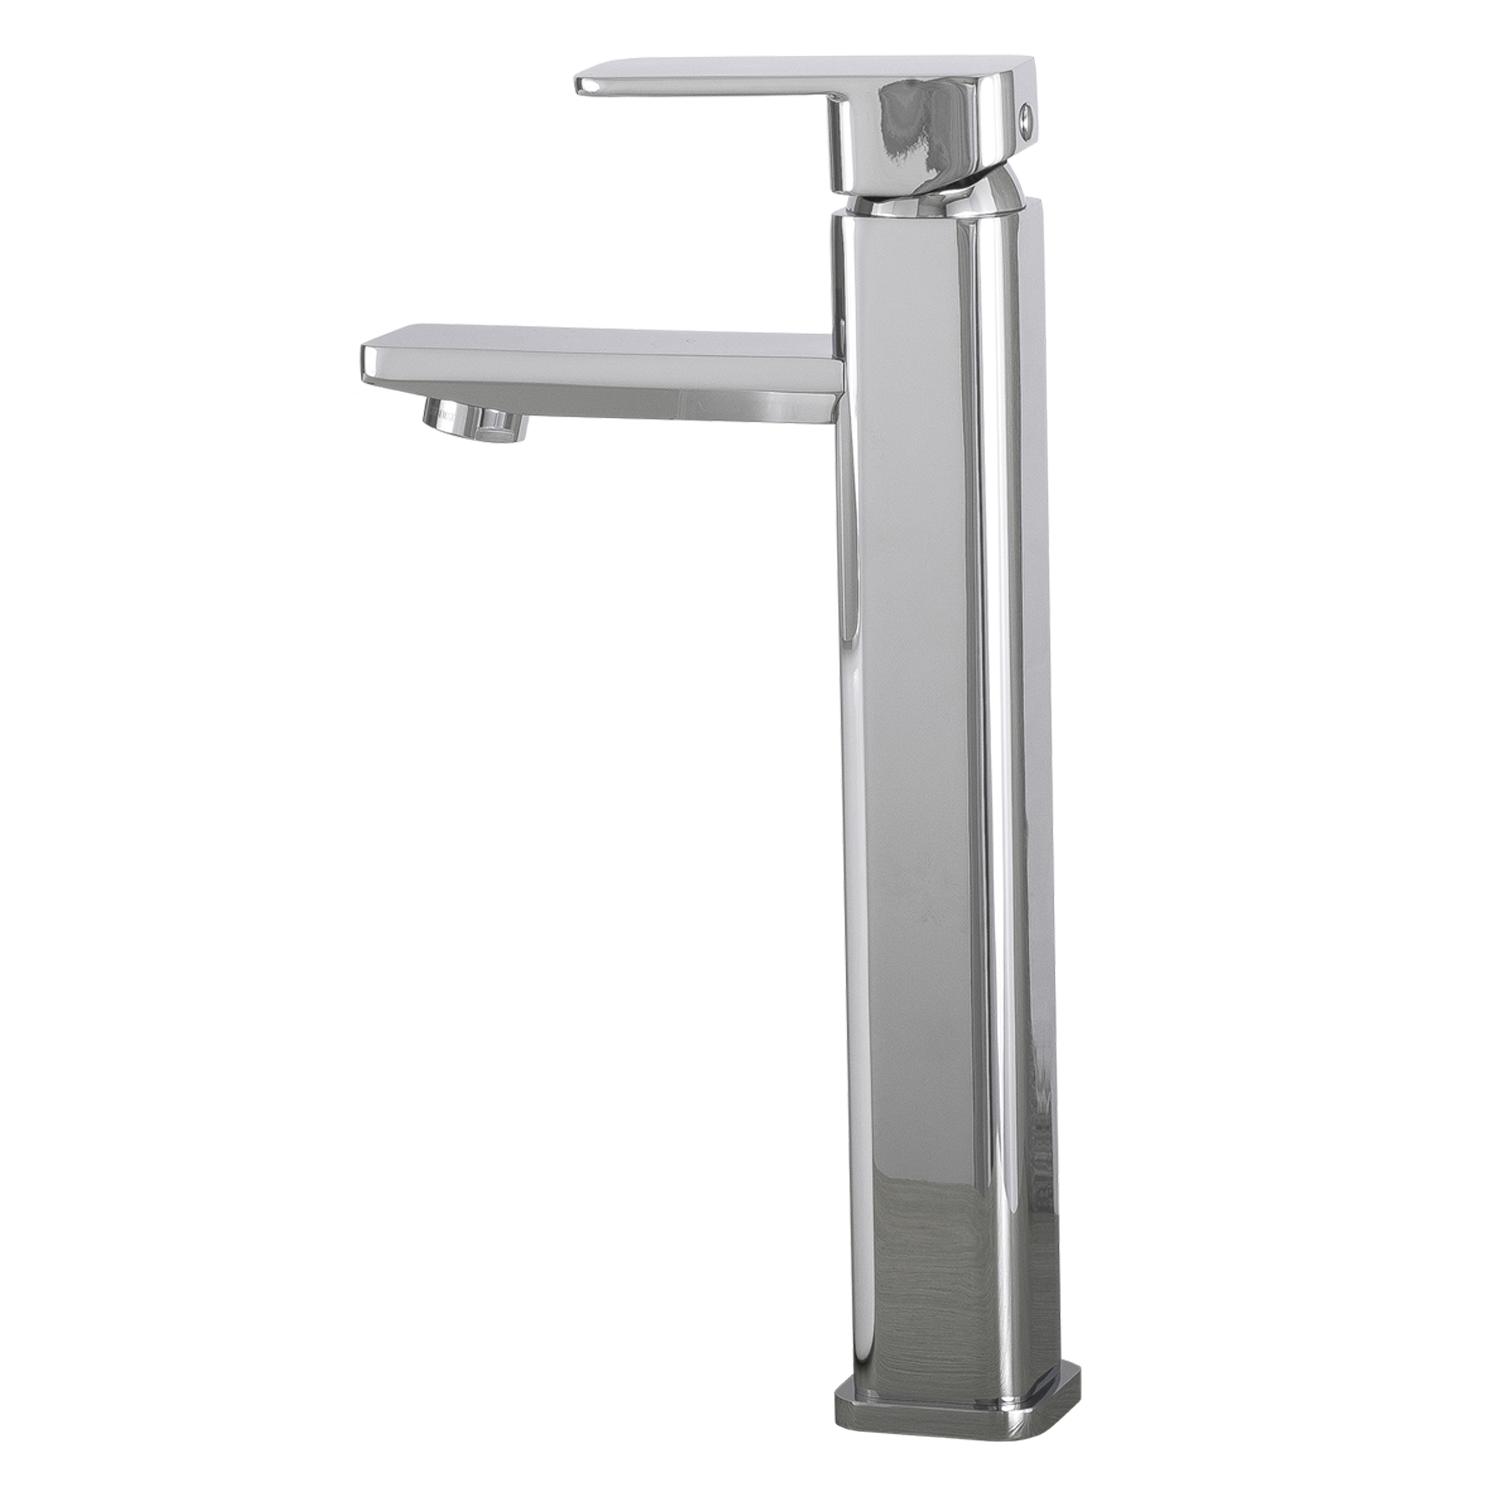 DAX Single Handle Vessel Sink Bathroom Faucet, Brass Body, Chrome Finish, 5-15/16 x 11-15/16 Inches (DAX-8510B-CR)